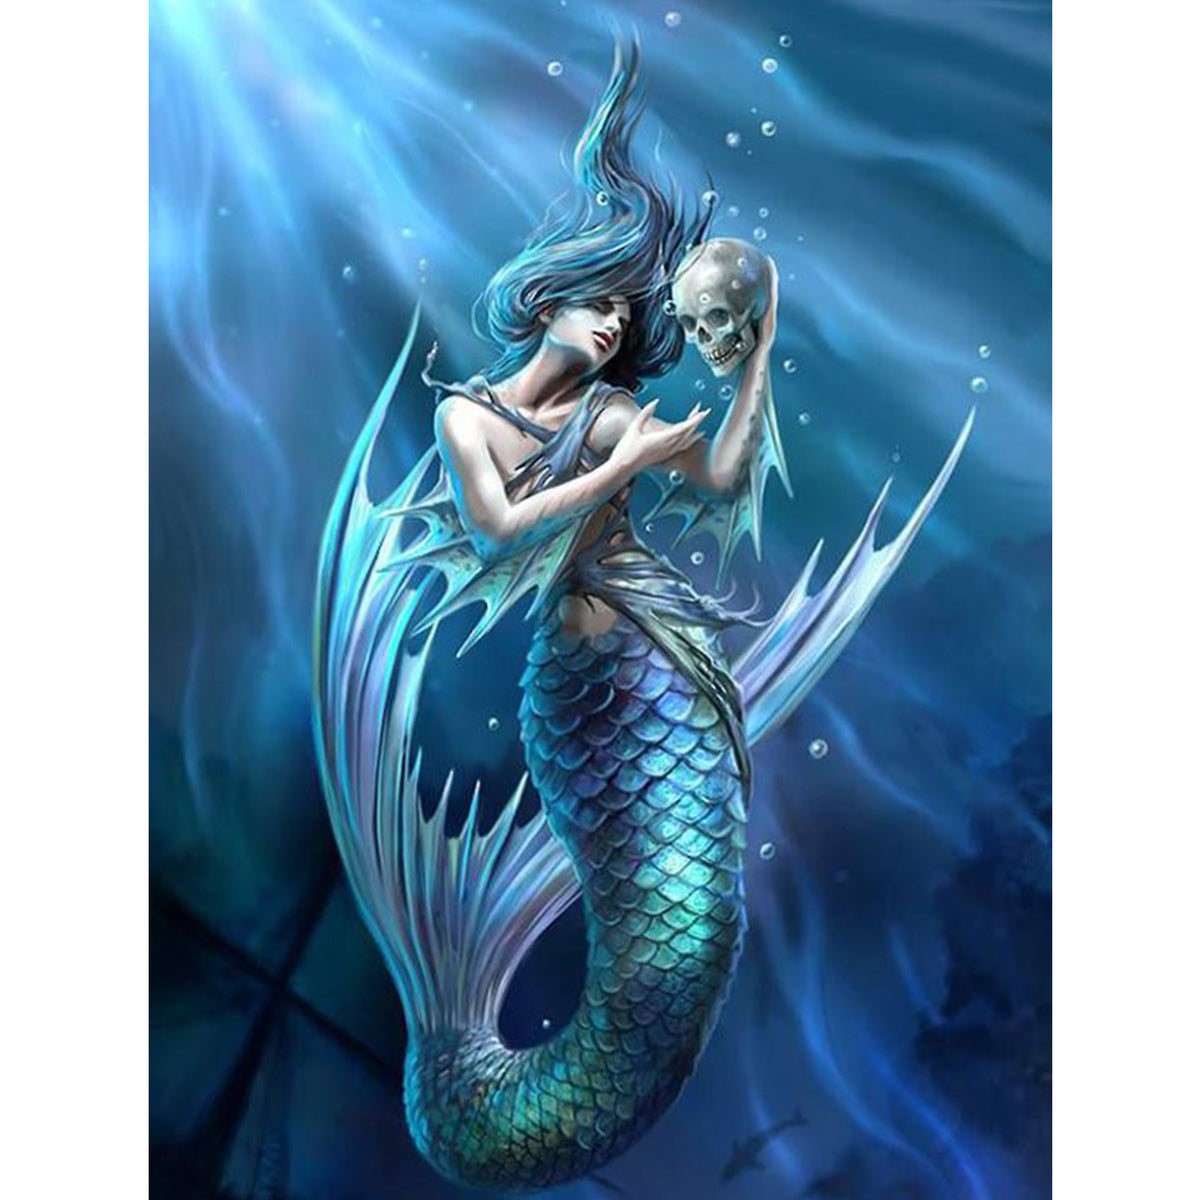 Make Your Own Dream Catcher Kit - Fairy Angel Mermaid Dragon